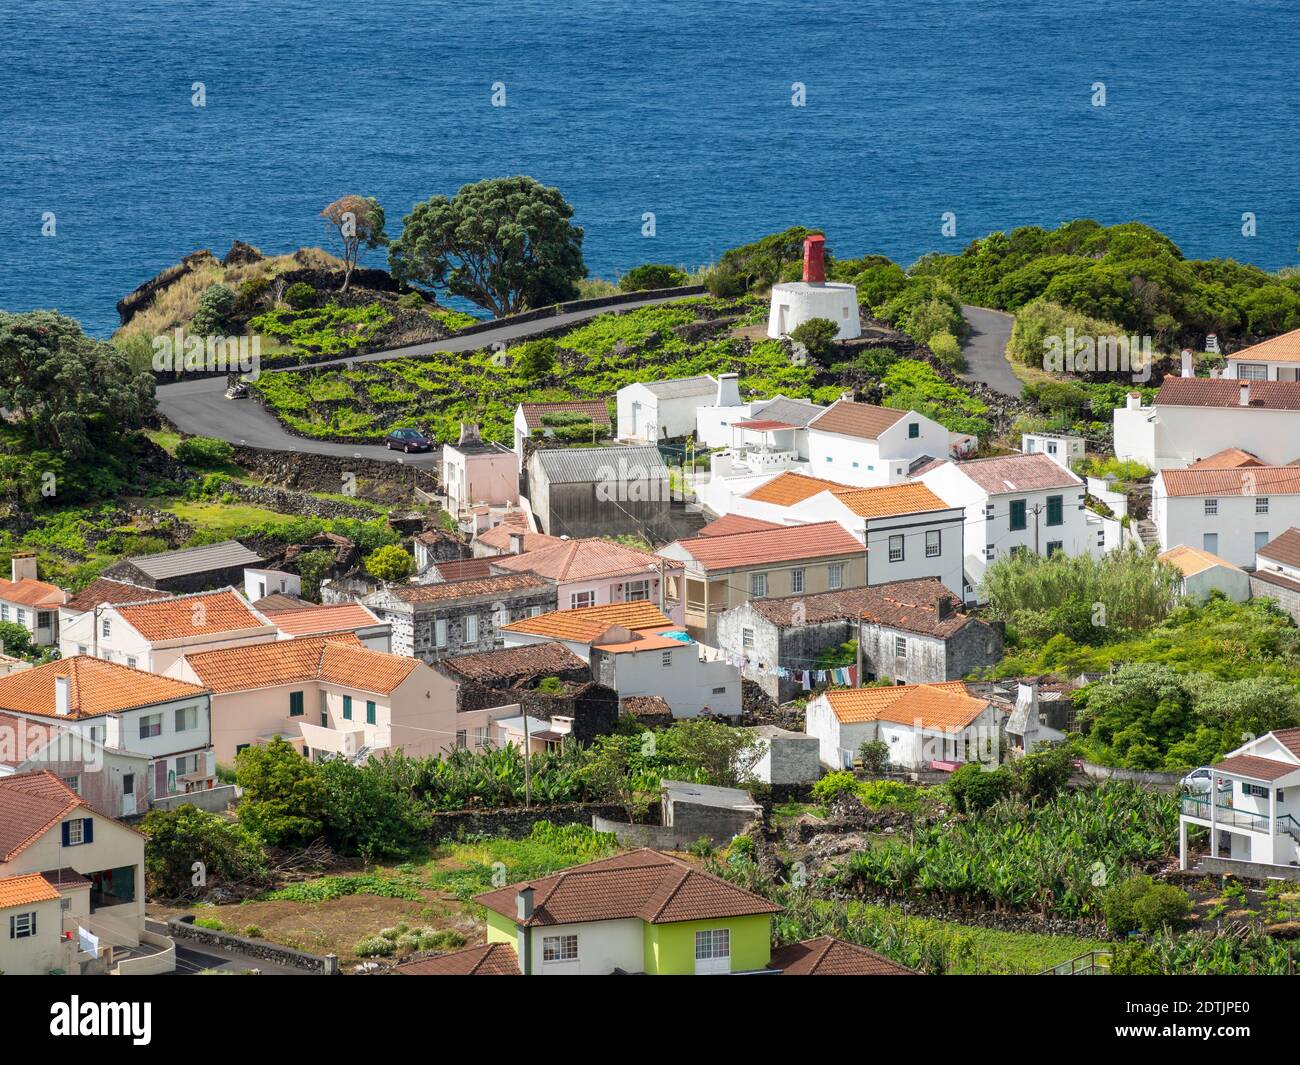 Village Ribeiras.  Pico Island, an island in the Azores (Ilhas dos Acores) in the Atlantic ocean. The Azores are an autonomous region of Portugal. Eur Stock Photo